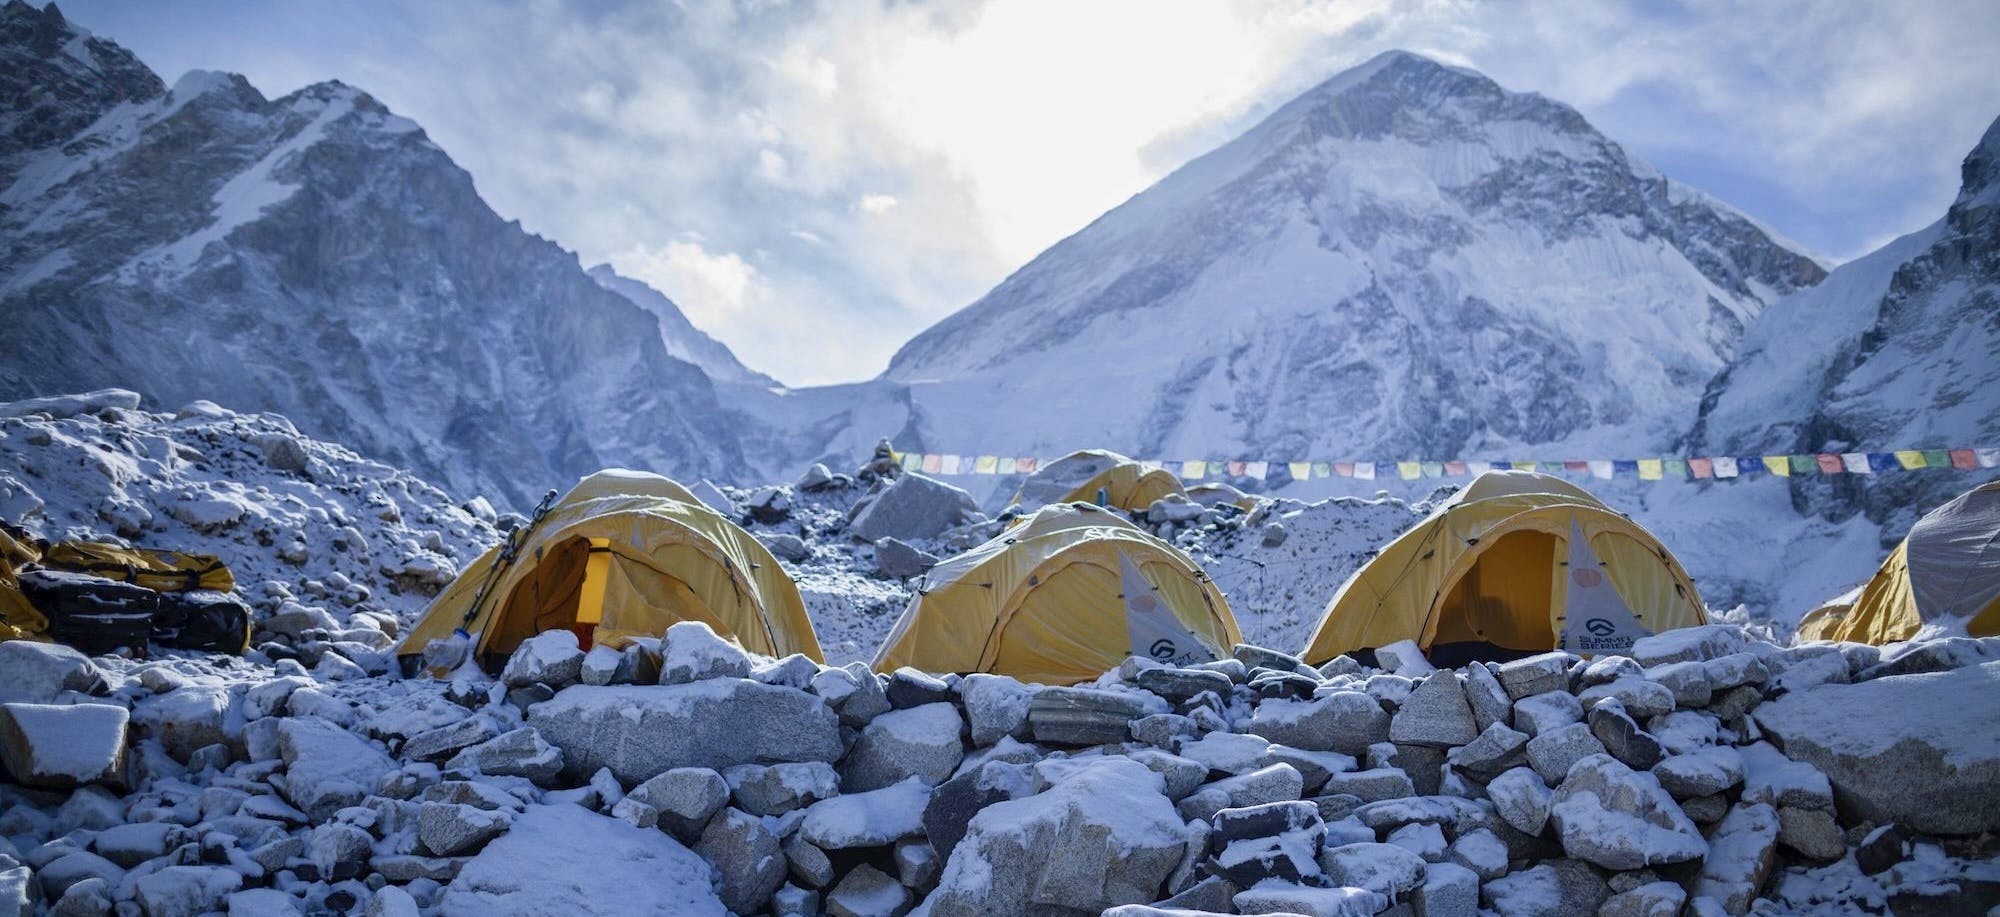 How do I prepare physically for the Everest Base Camp Trek?